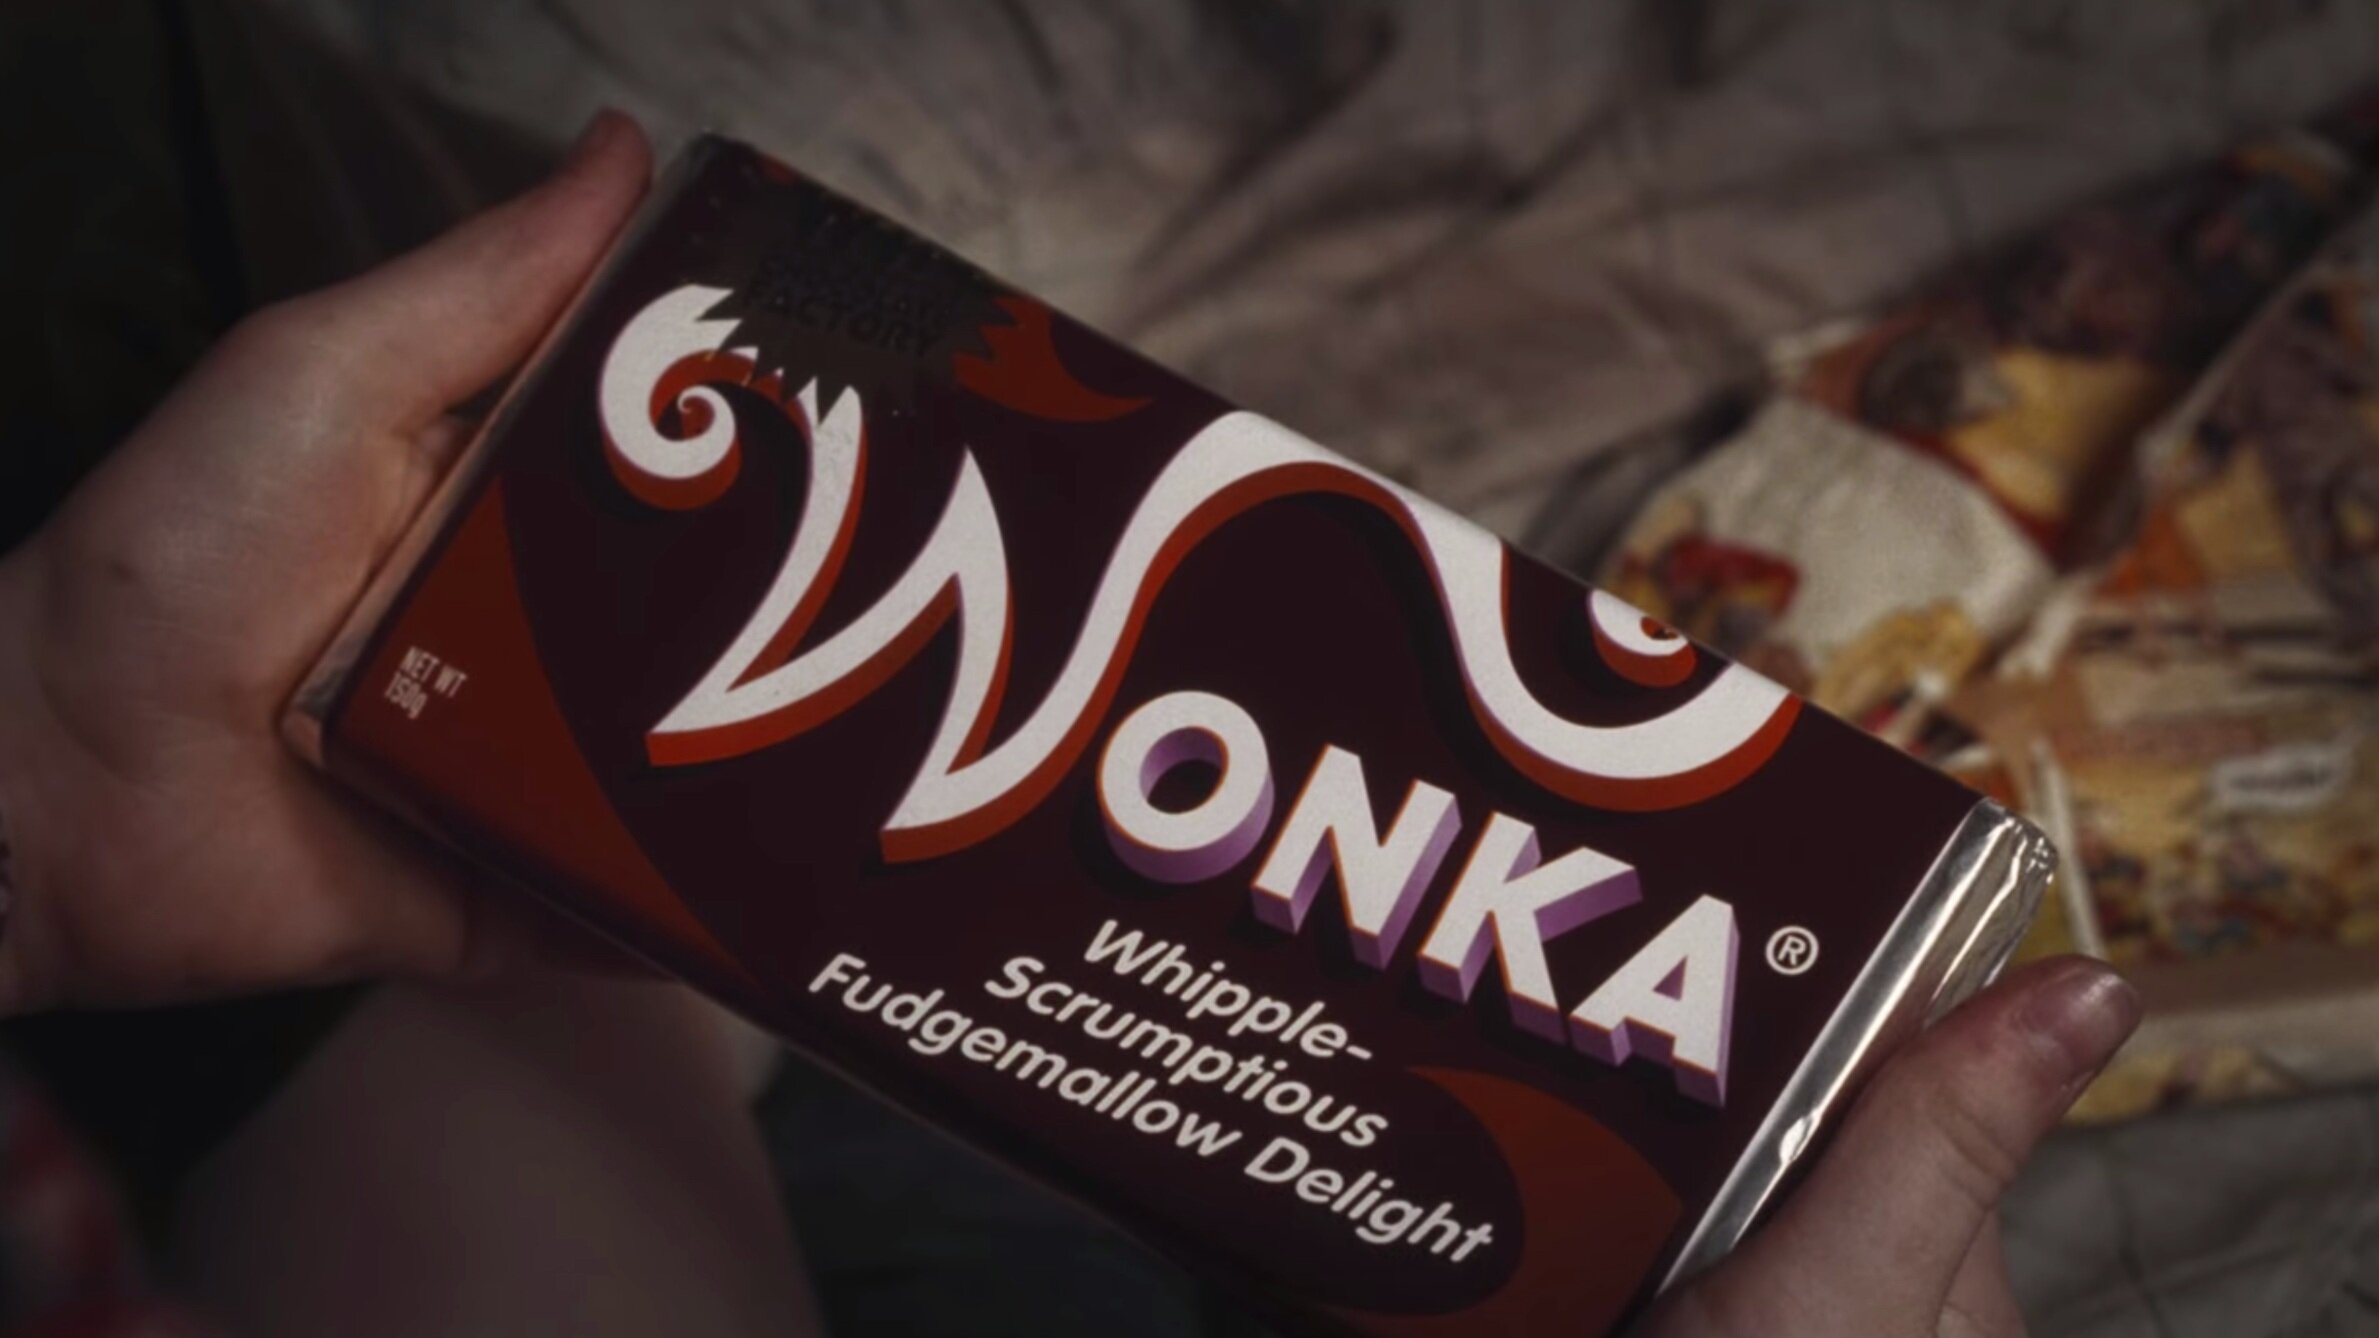 Imprimer soi-même des emballages de chocolat Willy Wonka